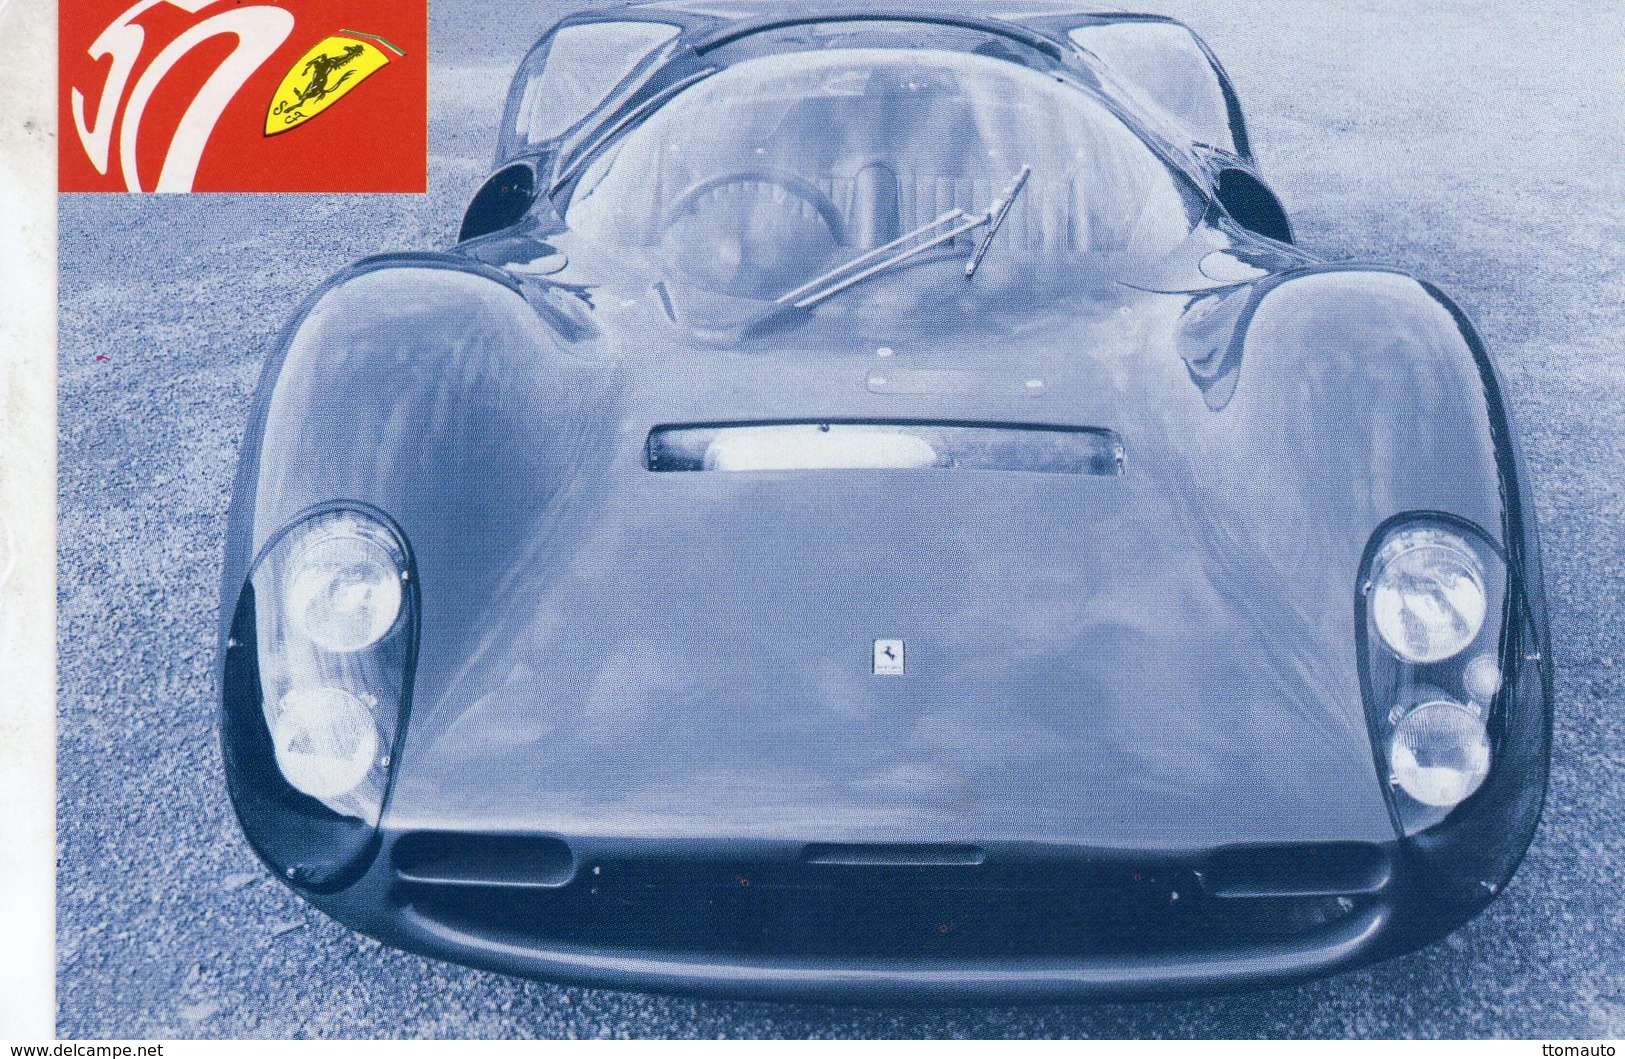 50 Years Of Ferrari - 1947-1997 -  Ferrari P4 At Fiorano  -  CPM - Grand Prix / F1